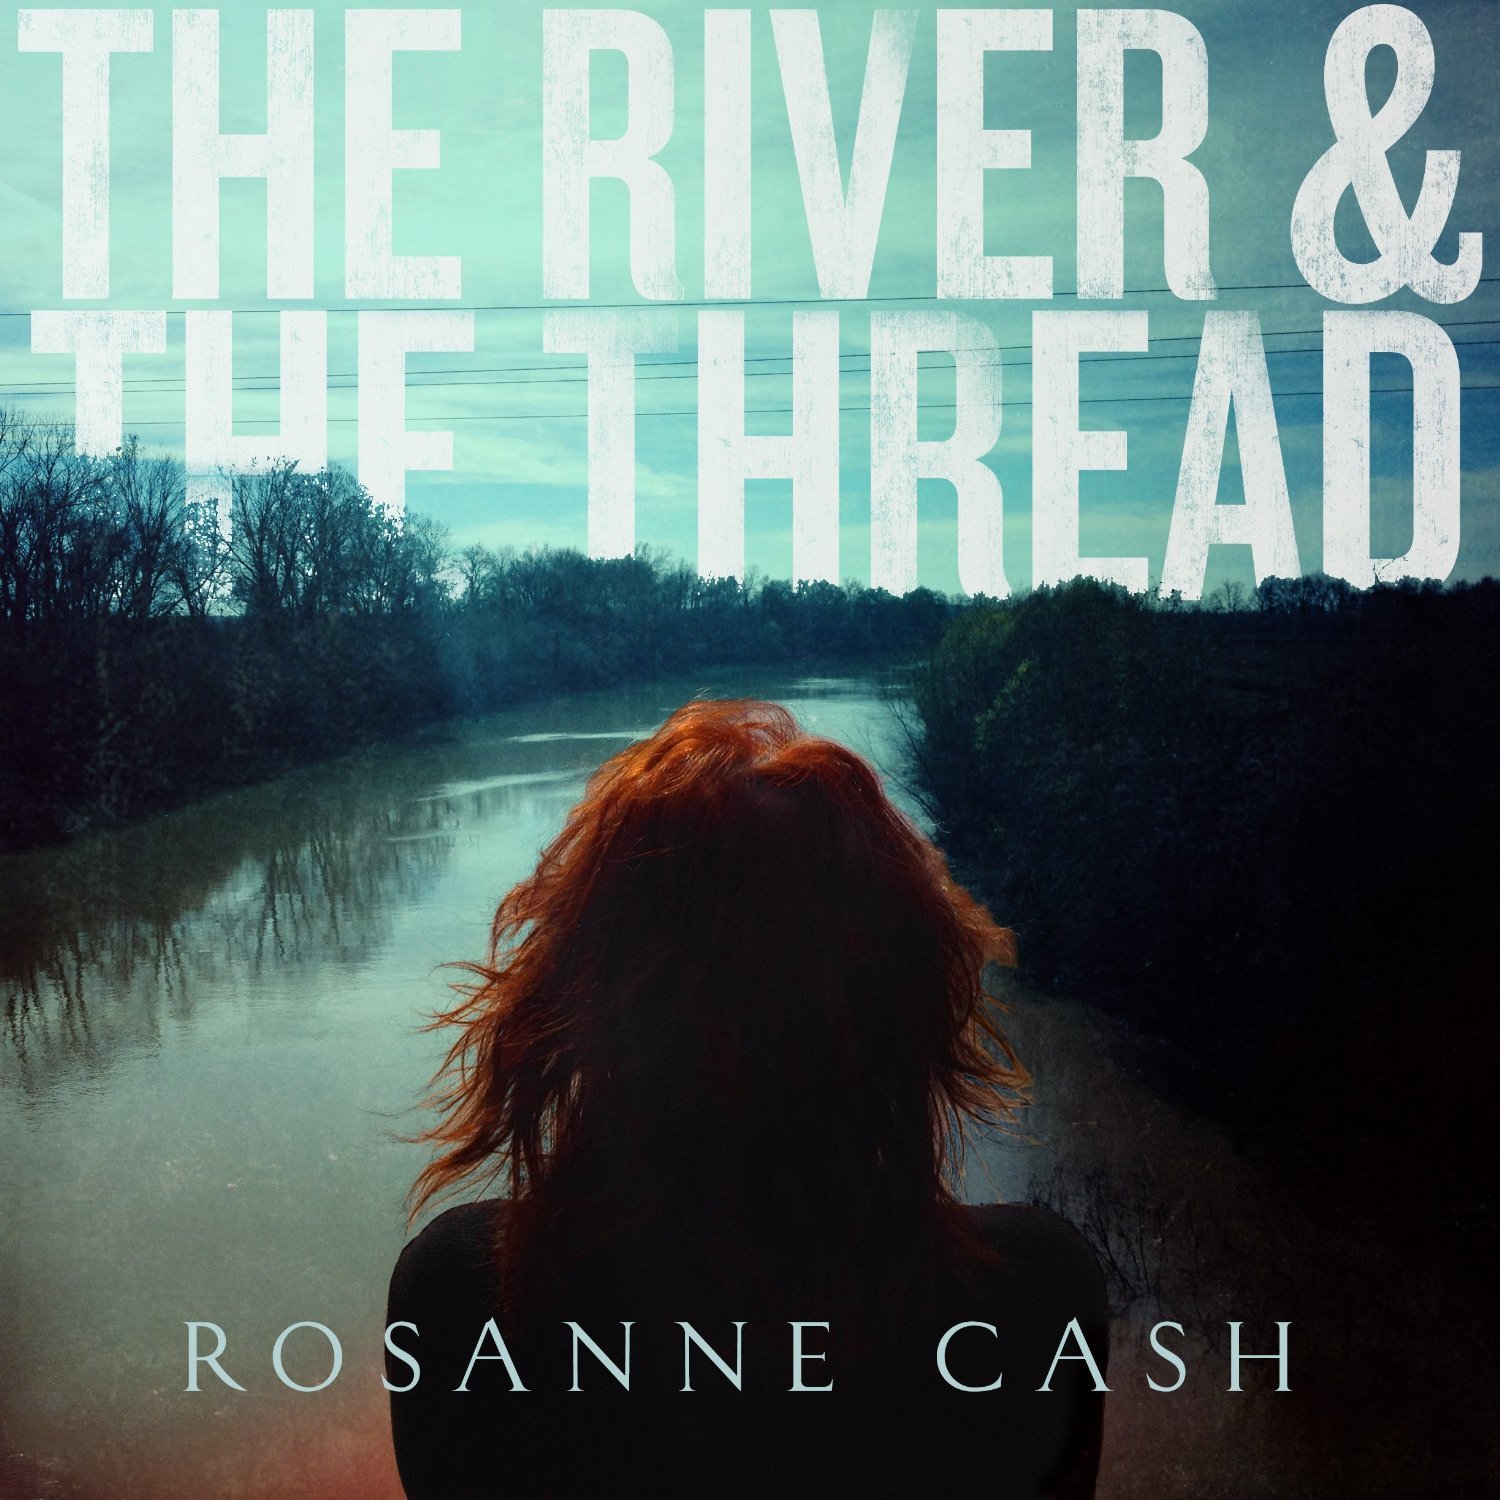 Rosanne Cash - The River & The Thread [Deluxe Edition] - Amazon.com ...